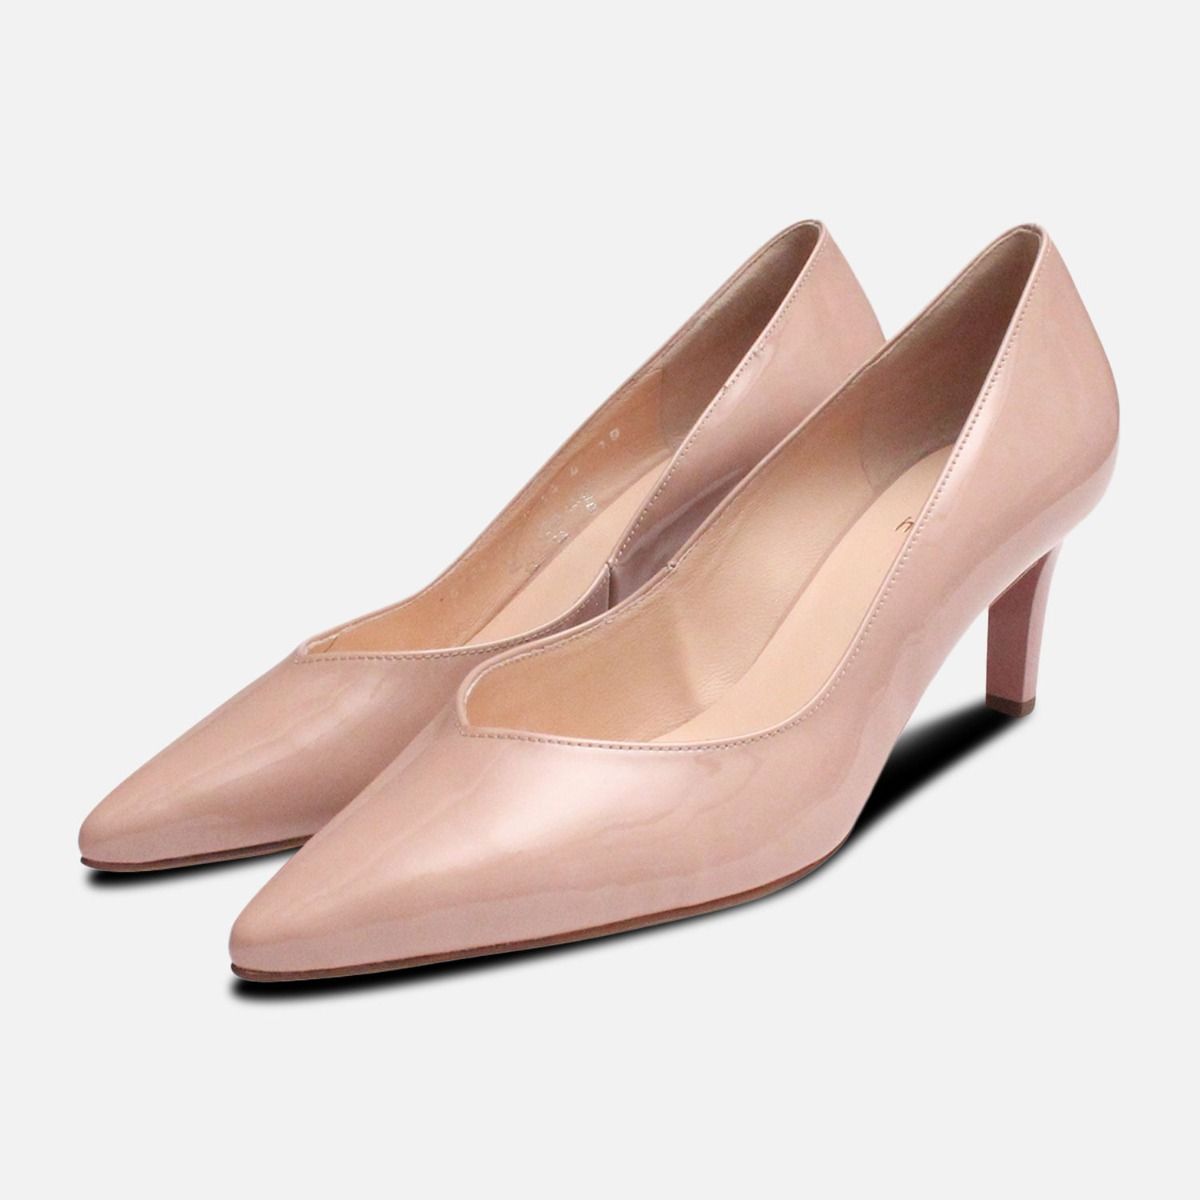 women's evening shoes medium heel